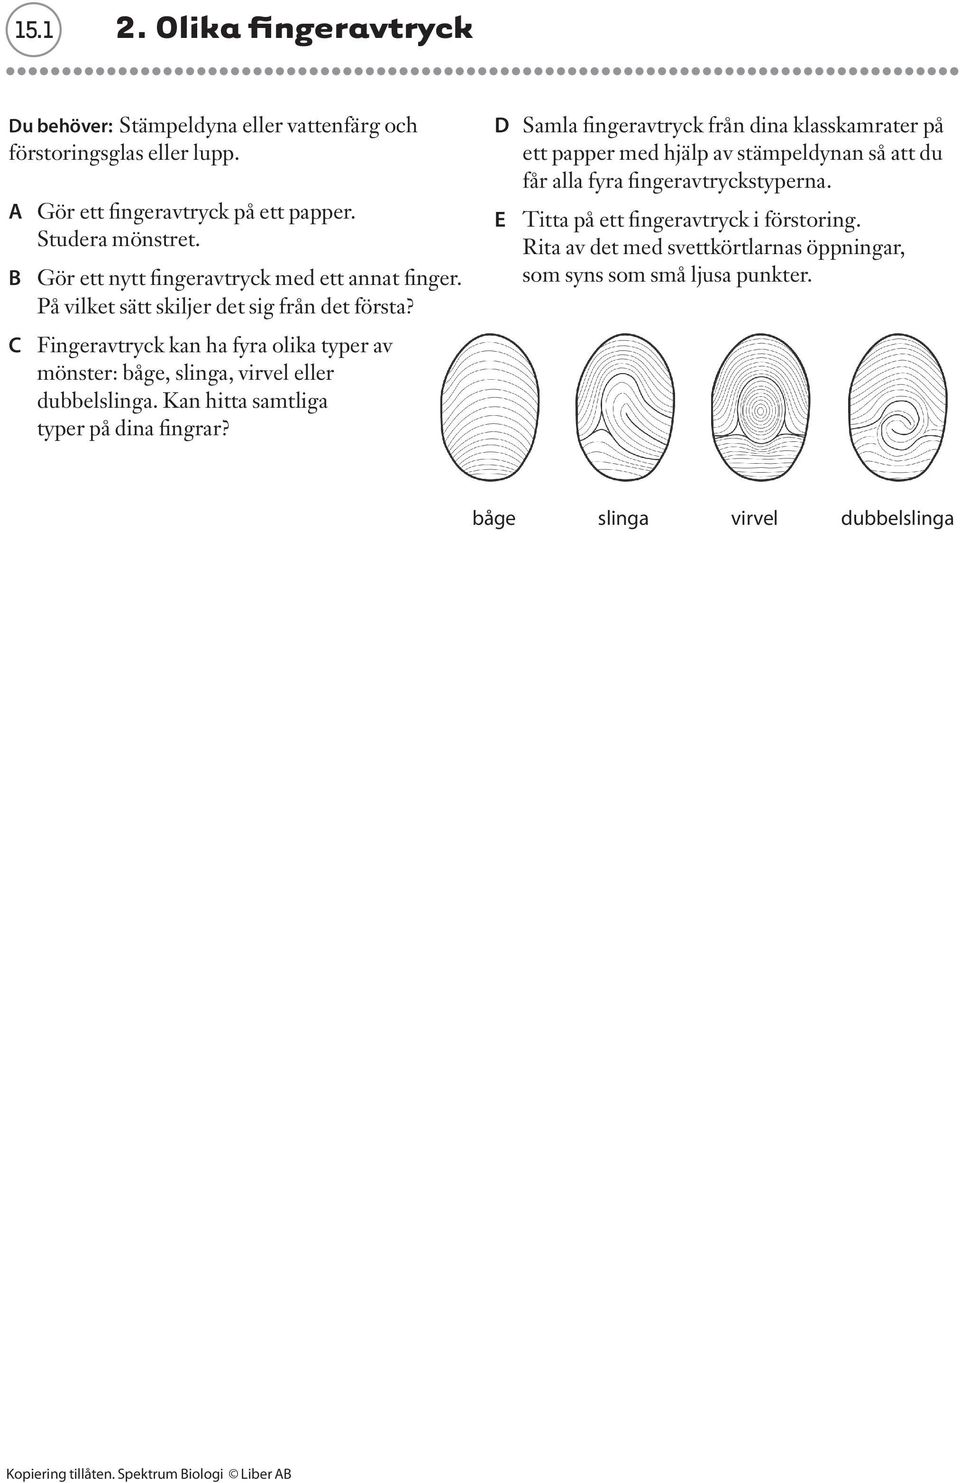 C Fingeravtryck kan ha fyra olika typer av mönster: båge, slinga, virvel eller dubbelslinga. Kan hitta samtliga typer på dina fingrar?